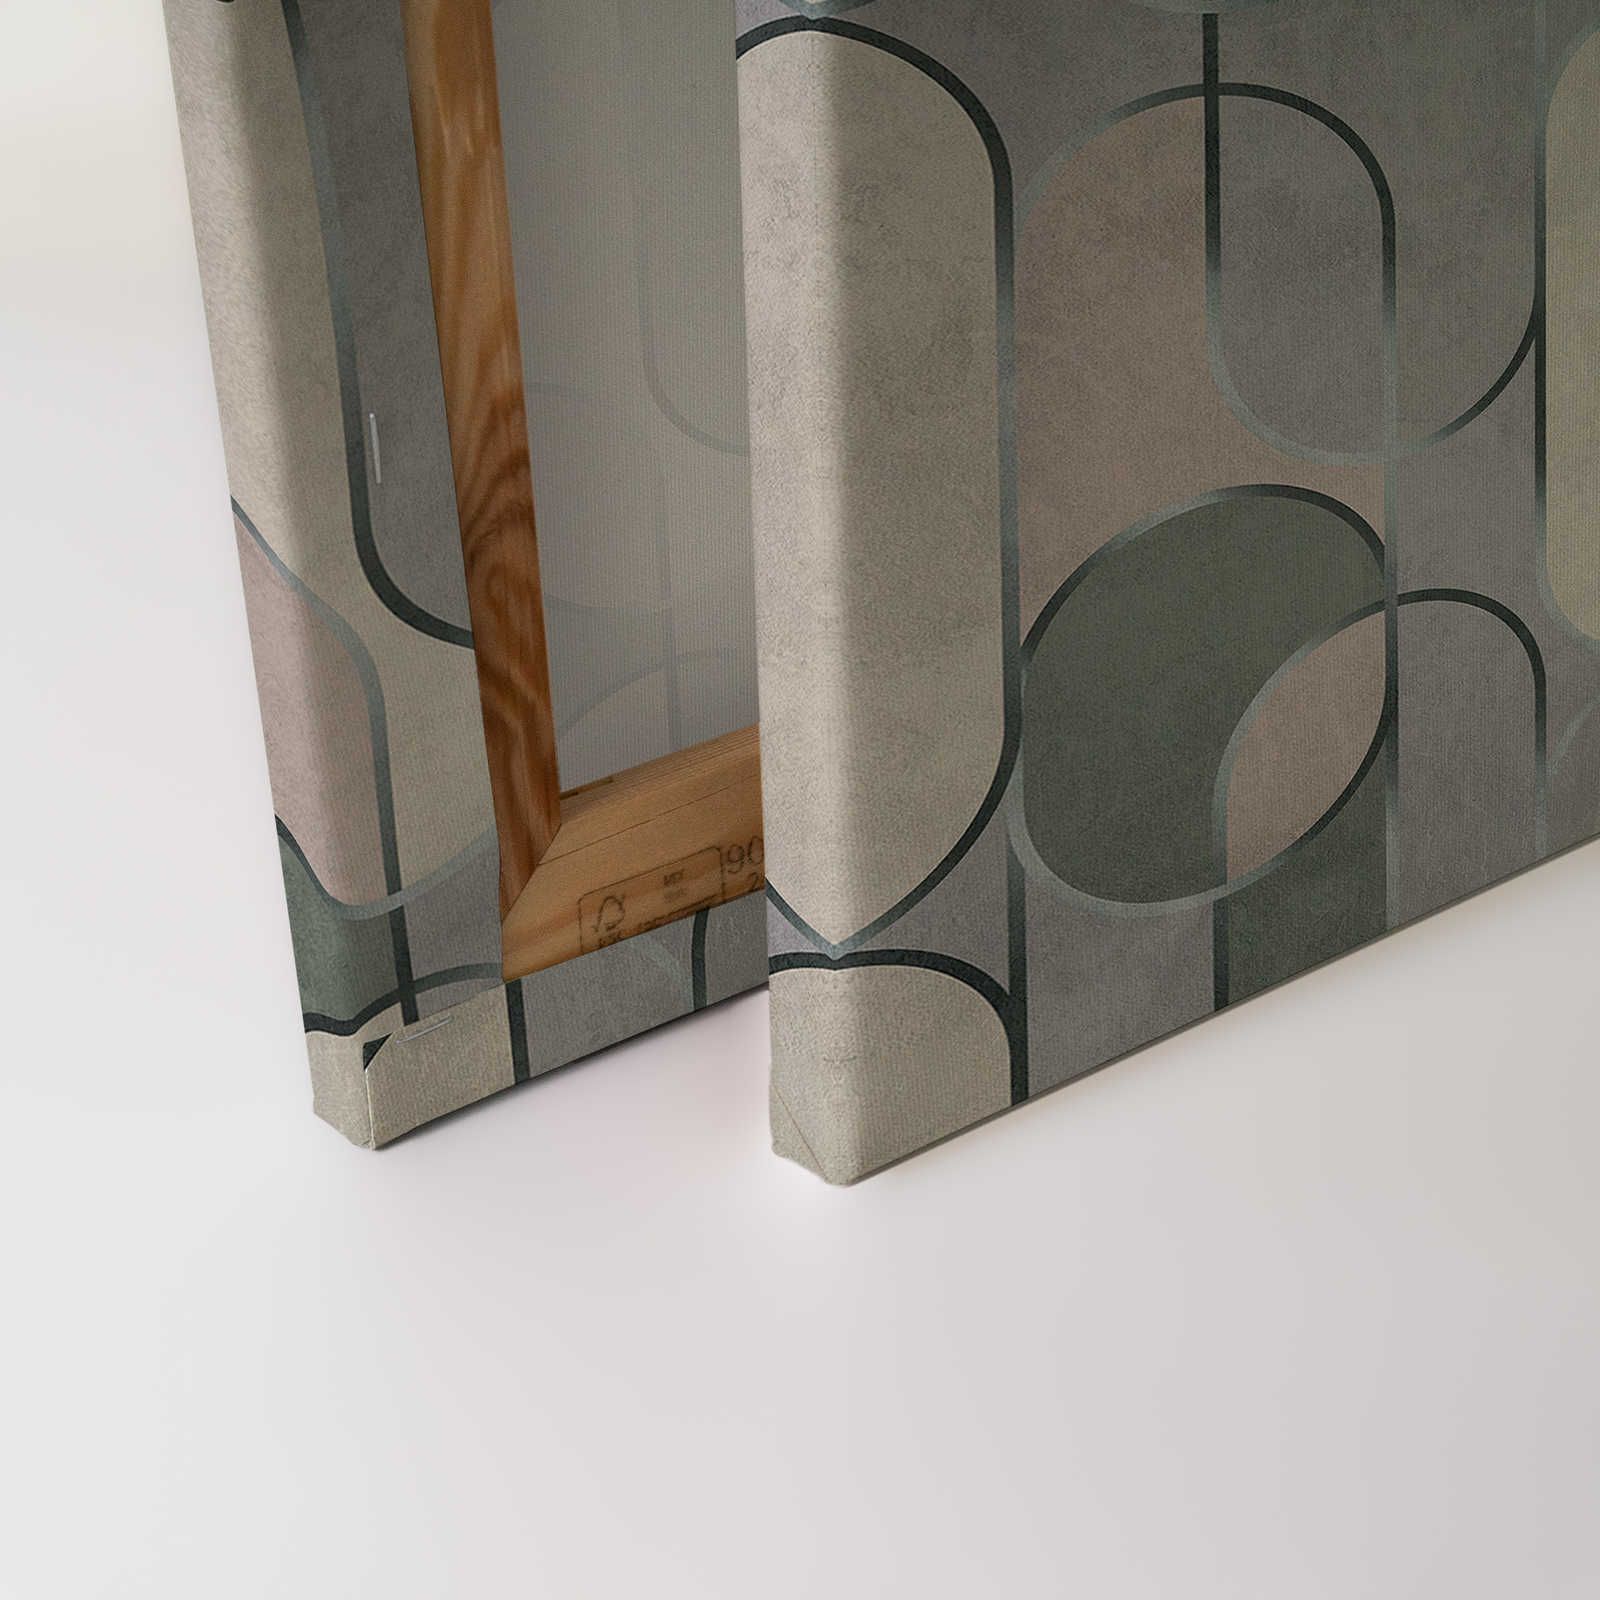             Ritz 2 - Leinwandbild Retro Stil, Grau & Grün mit Metallic Details – 0,90 m x 0,60 m
        